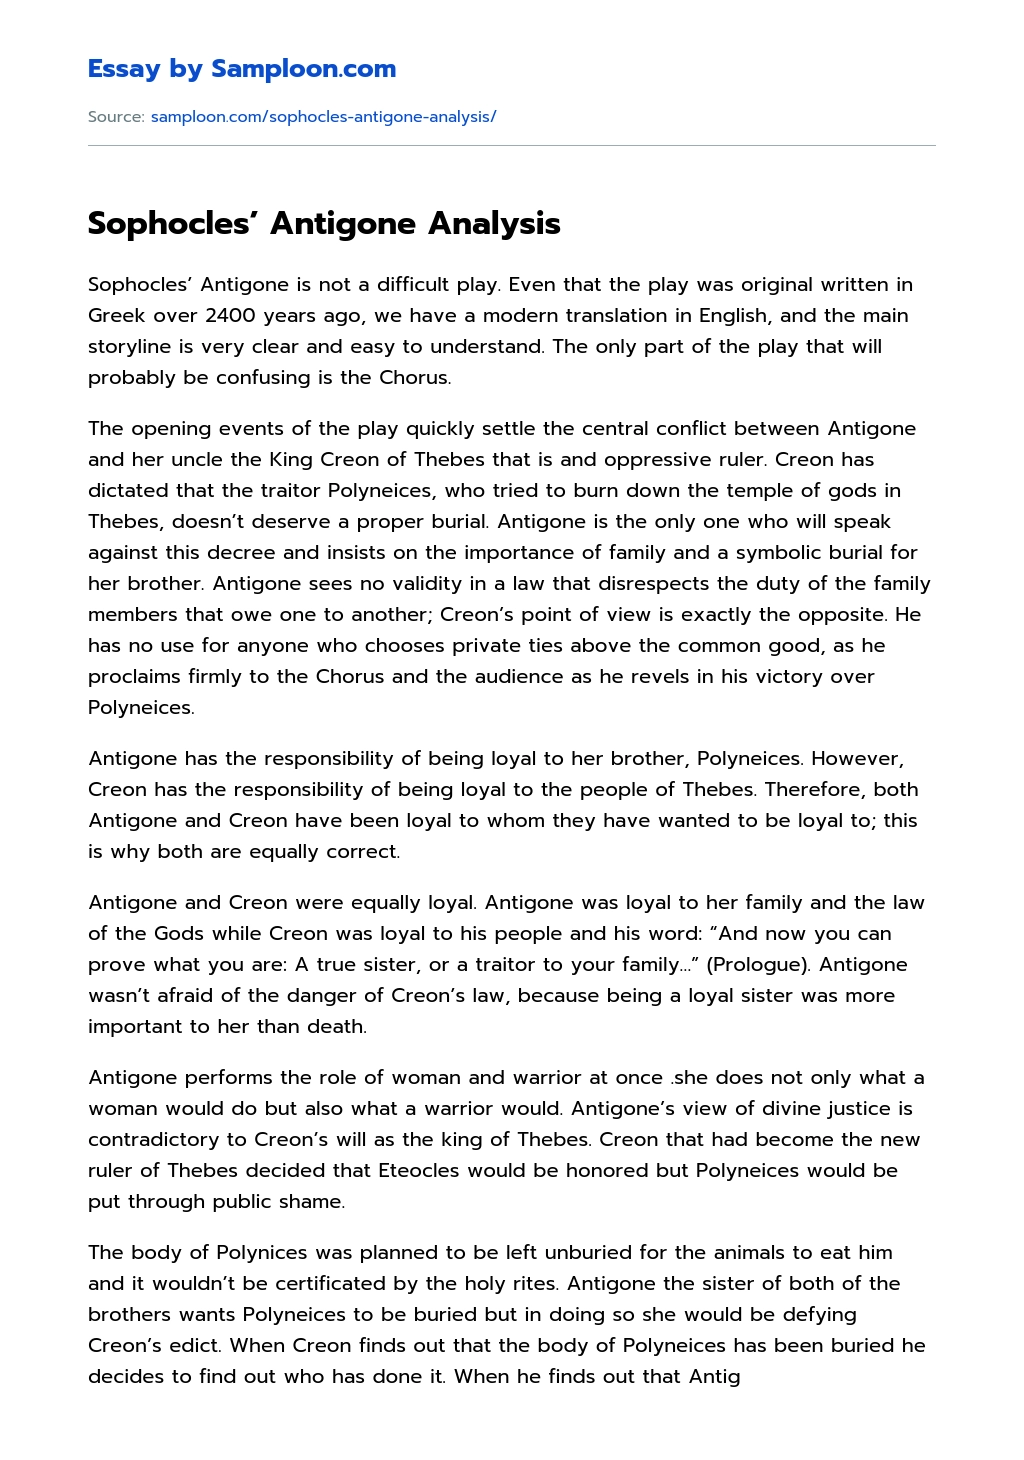 Sophocles’ Antigone Analysis essay